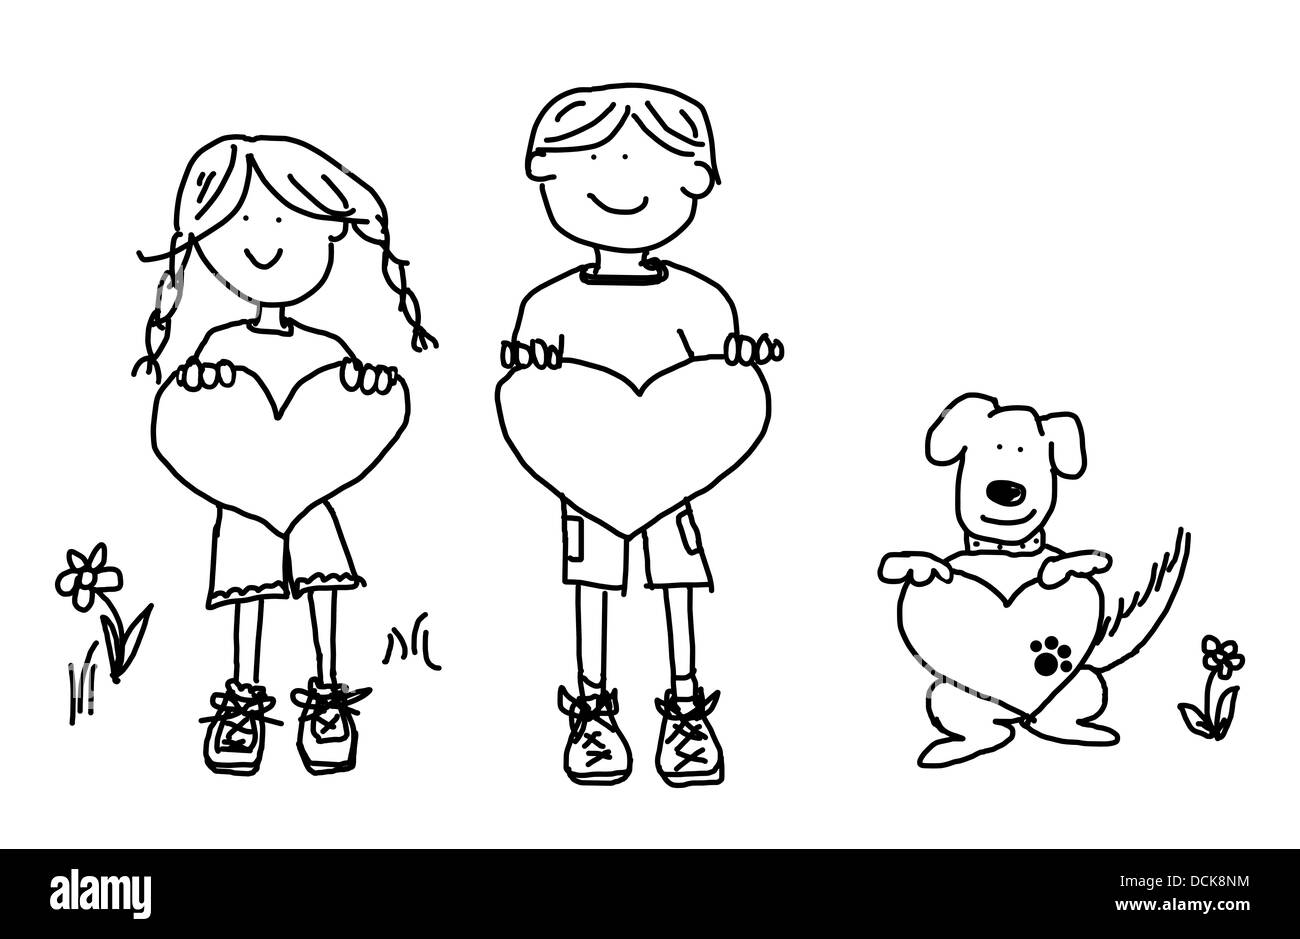 Boy, girl, and dog cartoon holding heart shape sign Stock Photo